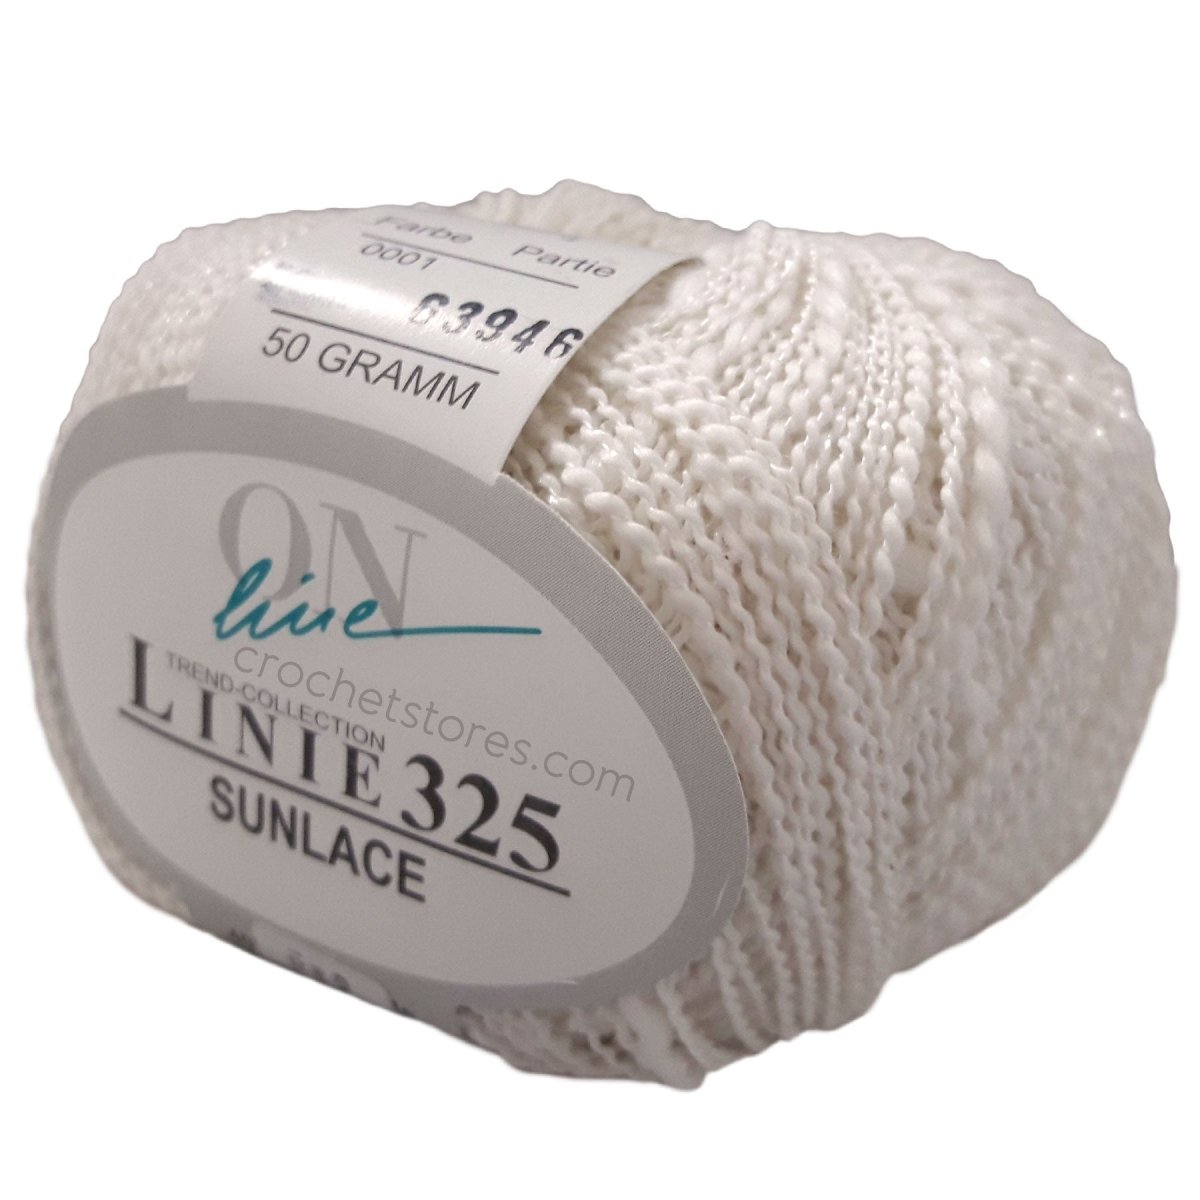 SUNLACE - Crochetstores110325-0014014366138365